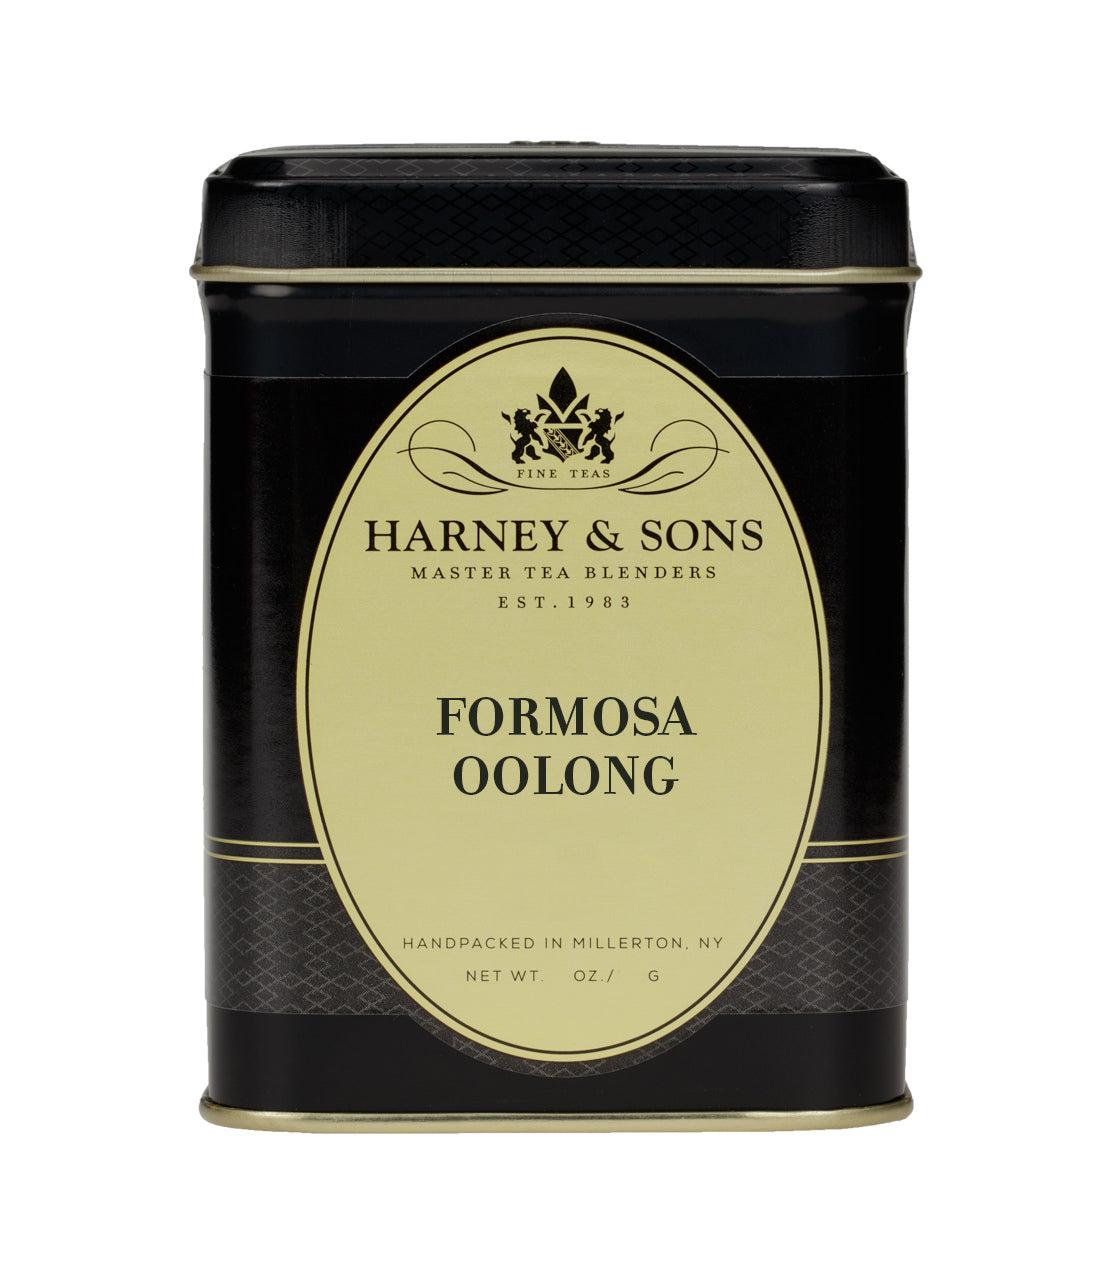 Formosa Oolong - Loose 3 oz. Tin - Harney & Sons Fine Teas